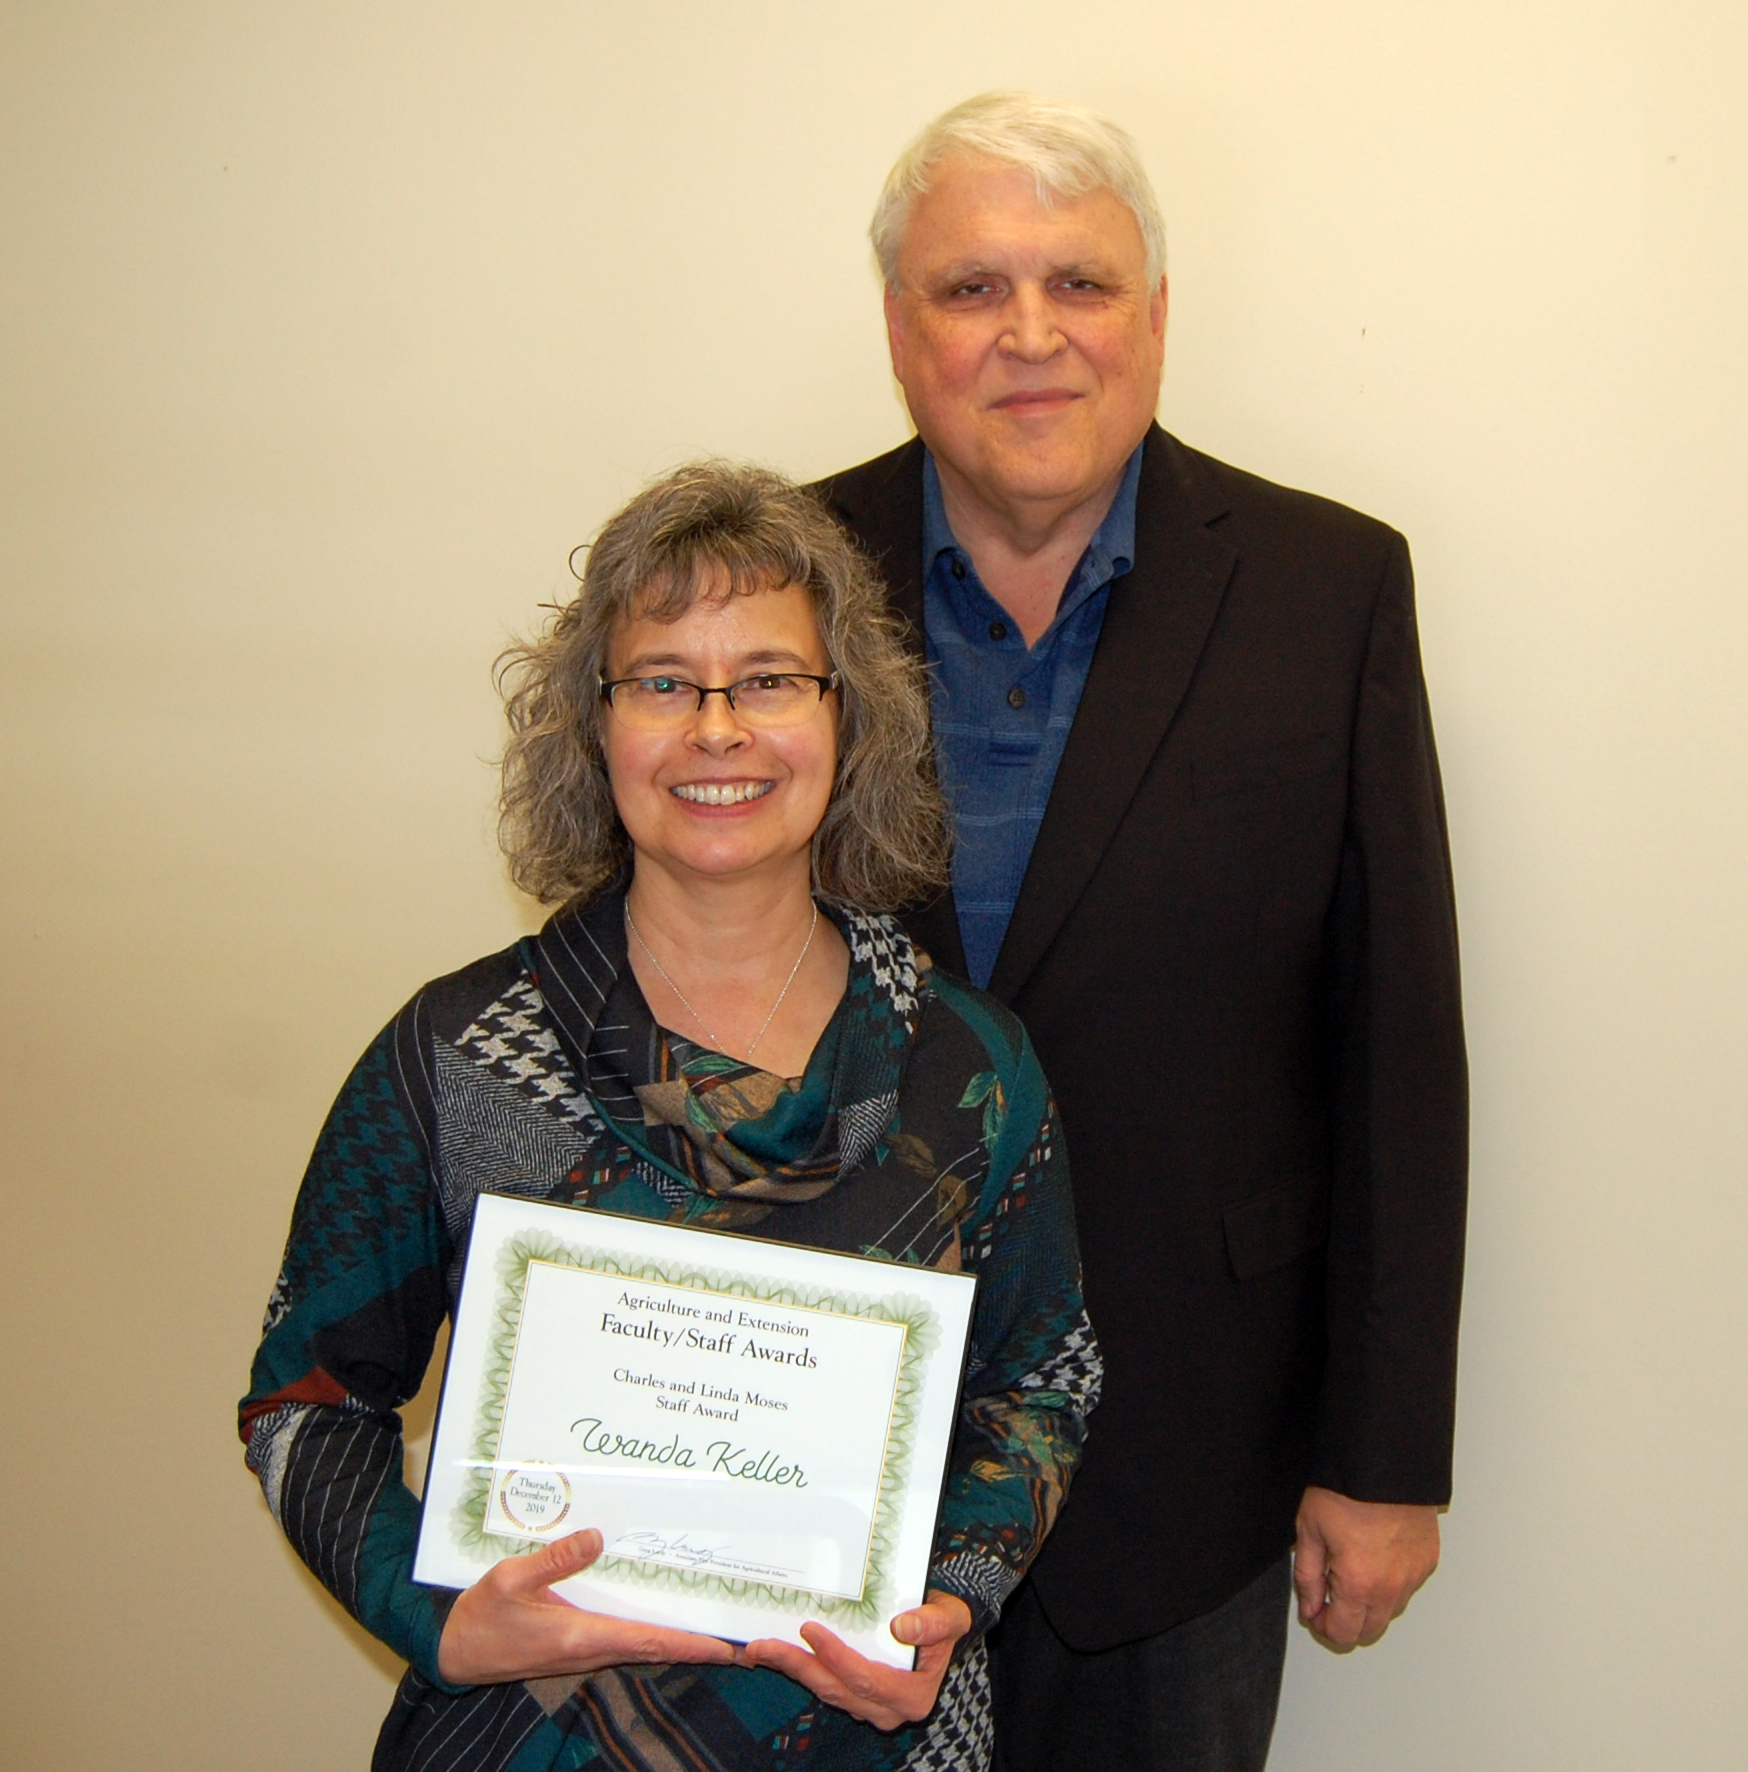 Wanda Keller, left, receives the Charles and Linda Moses Staff Award from David Buchanan, associate dean for academic programs. (NDSU photo)